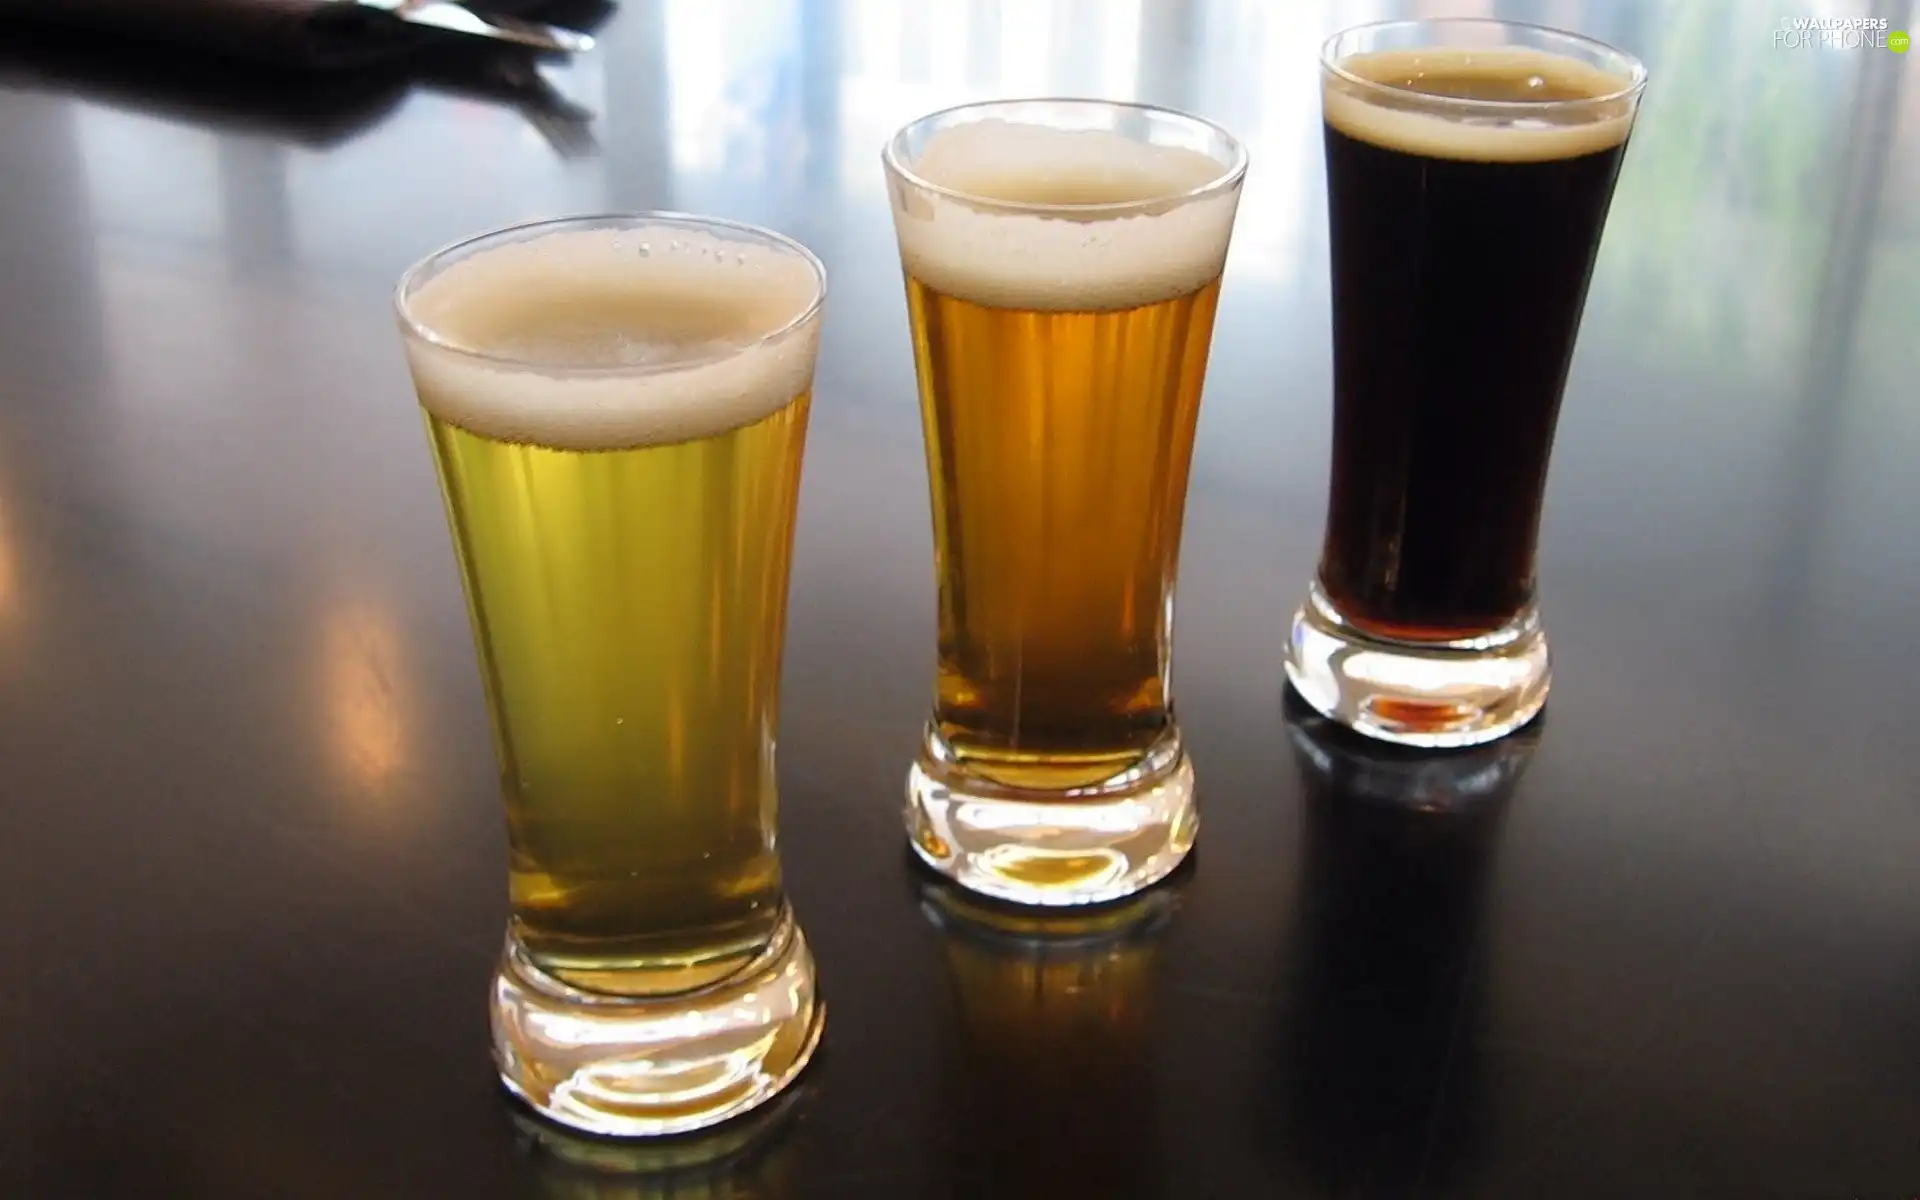 beer, Three, glasses